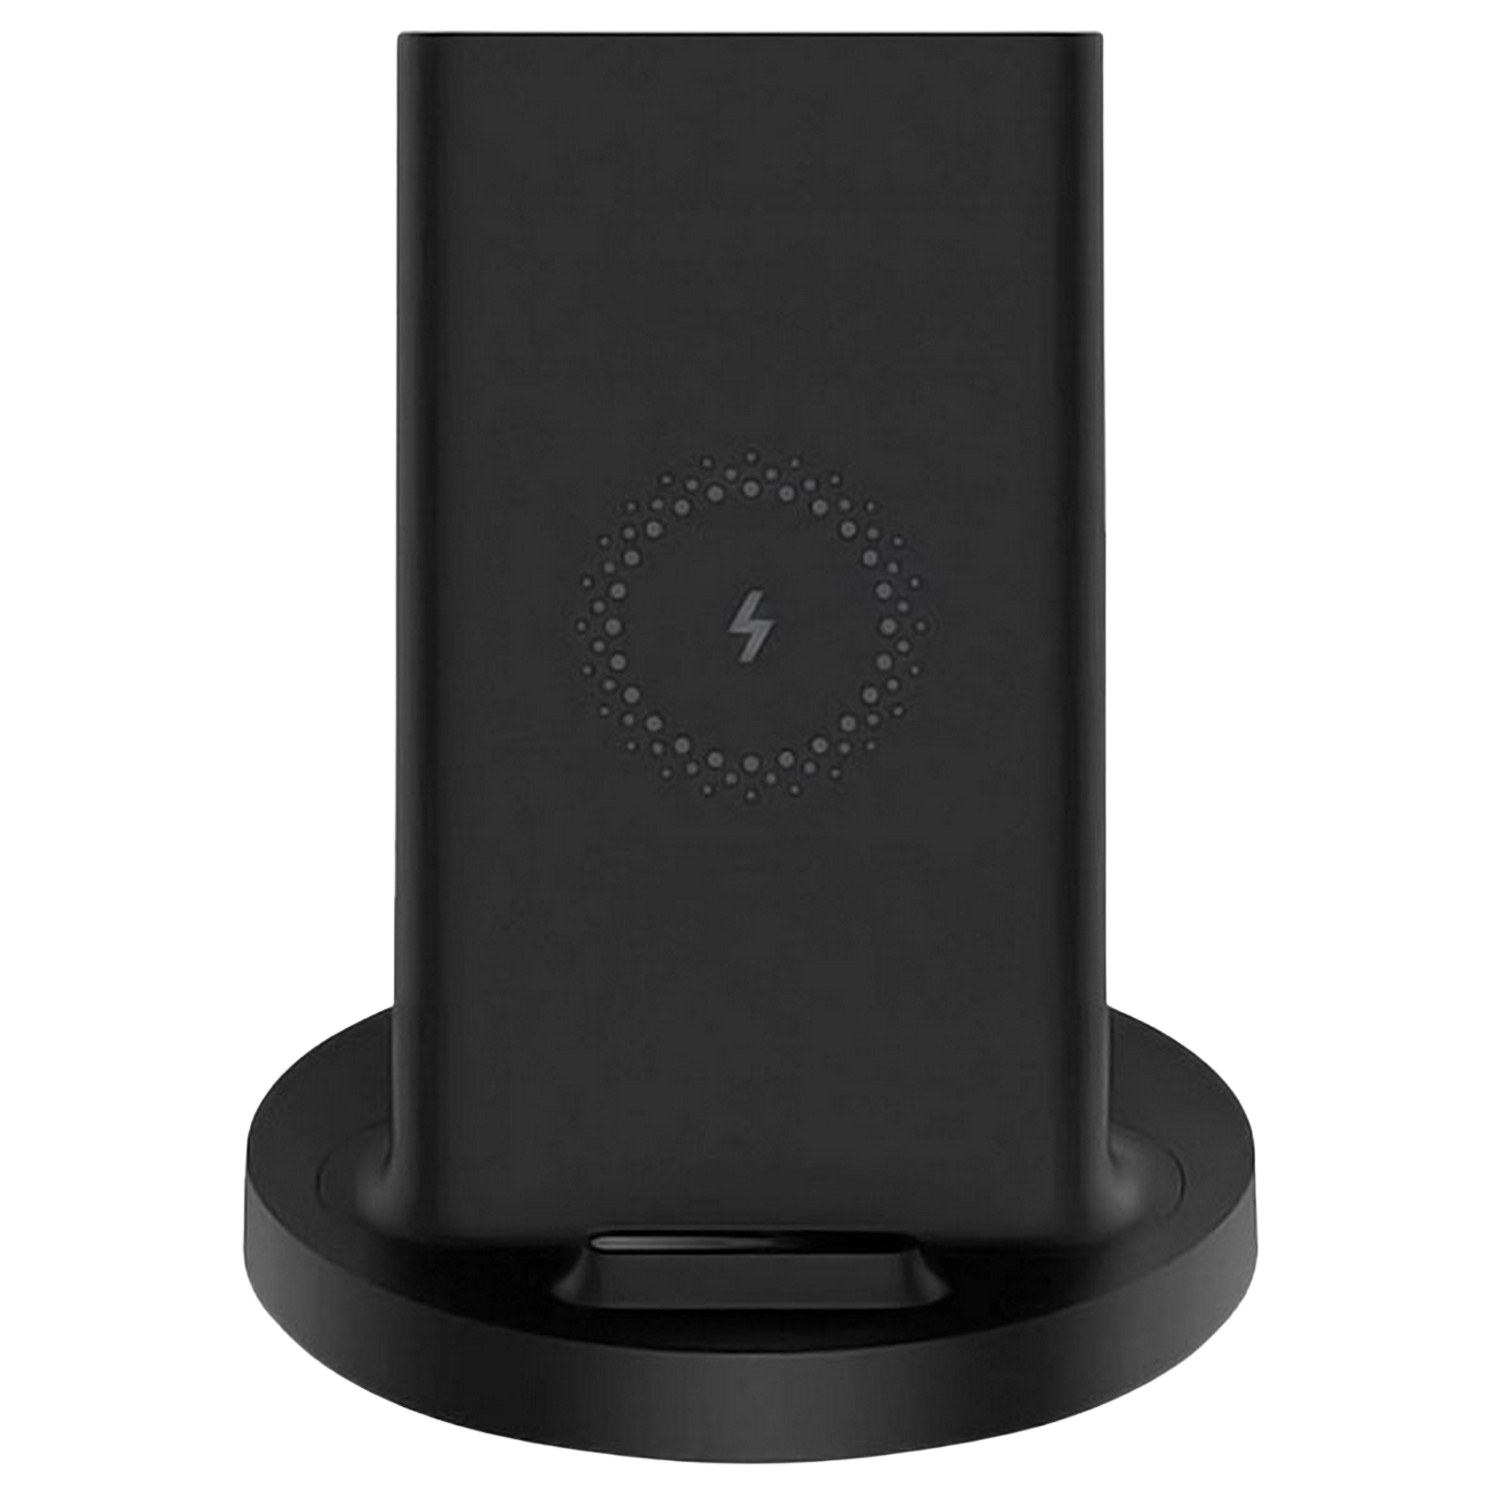 Cargador Xiaomi Mi 20w wireless standbatt charging para dispositivos qi universal